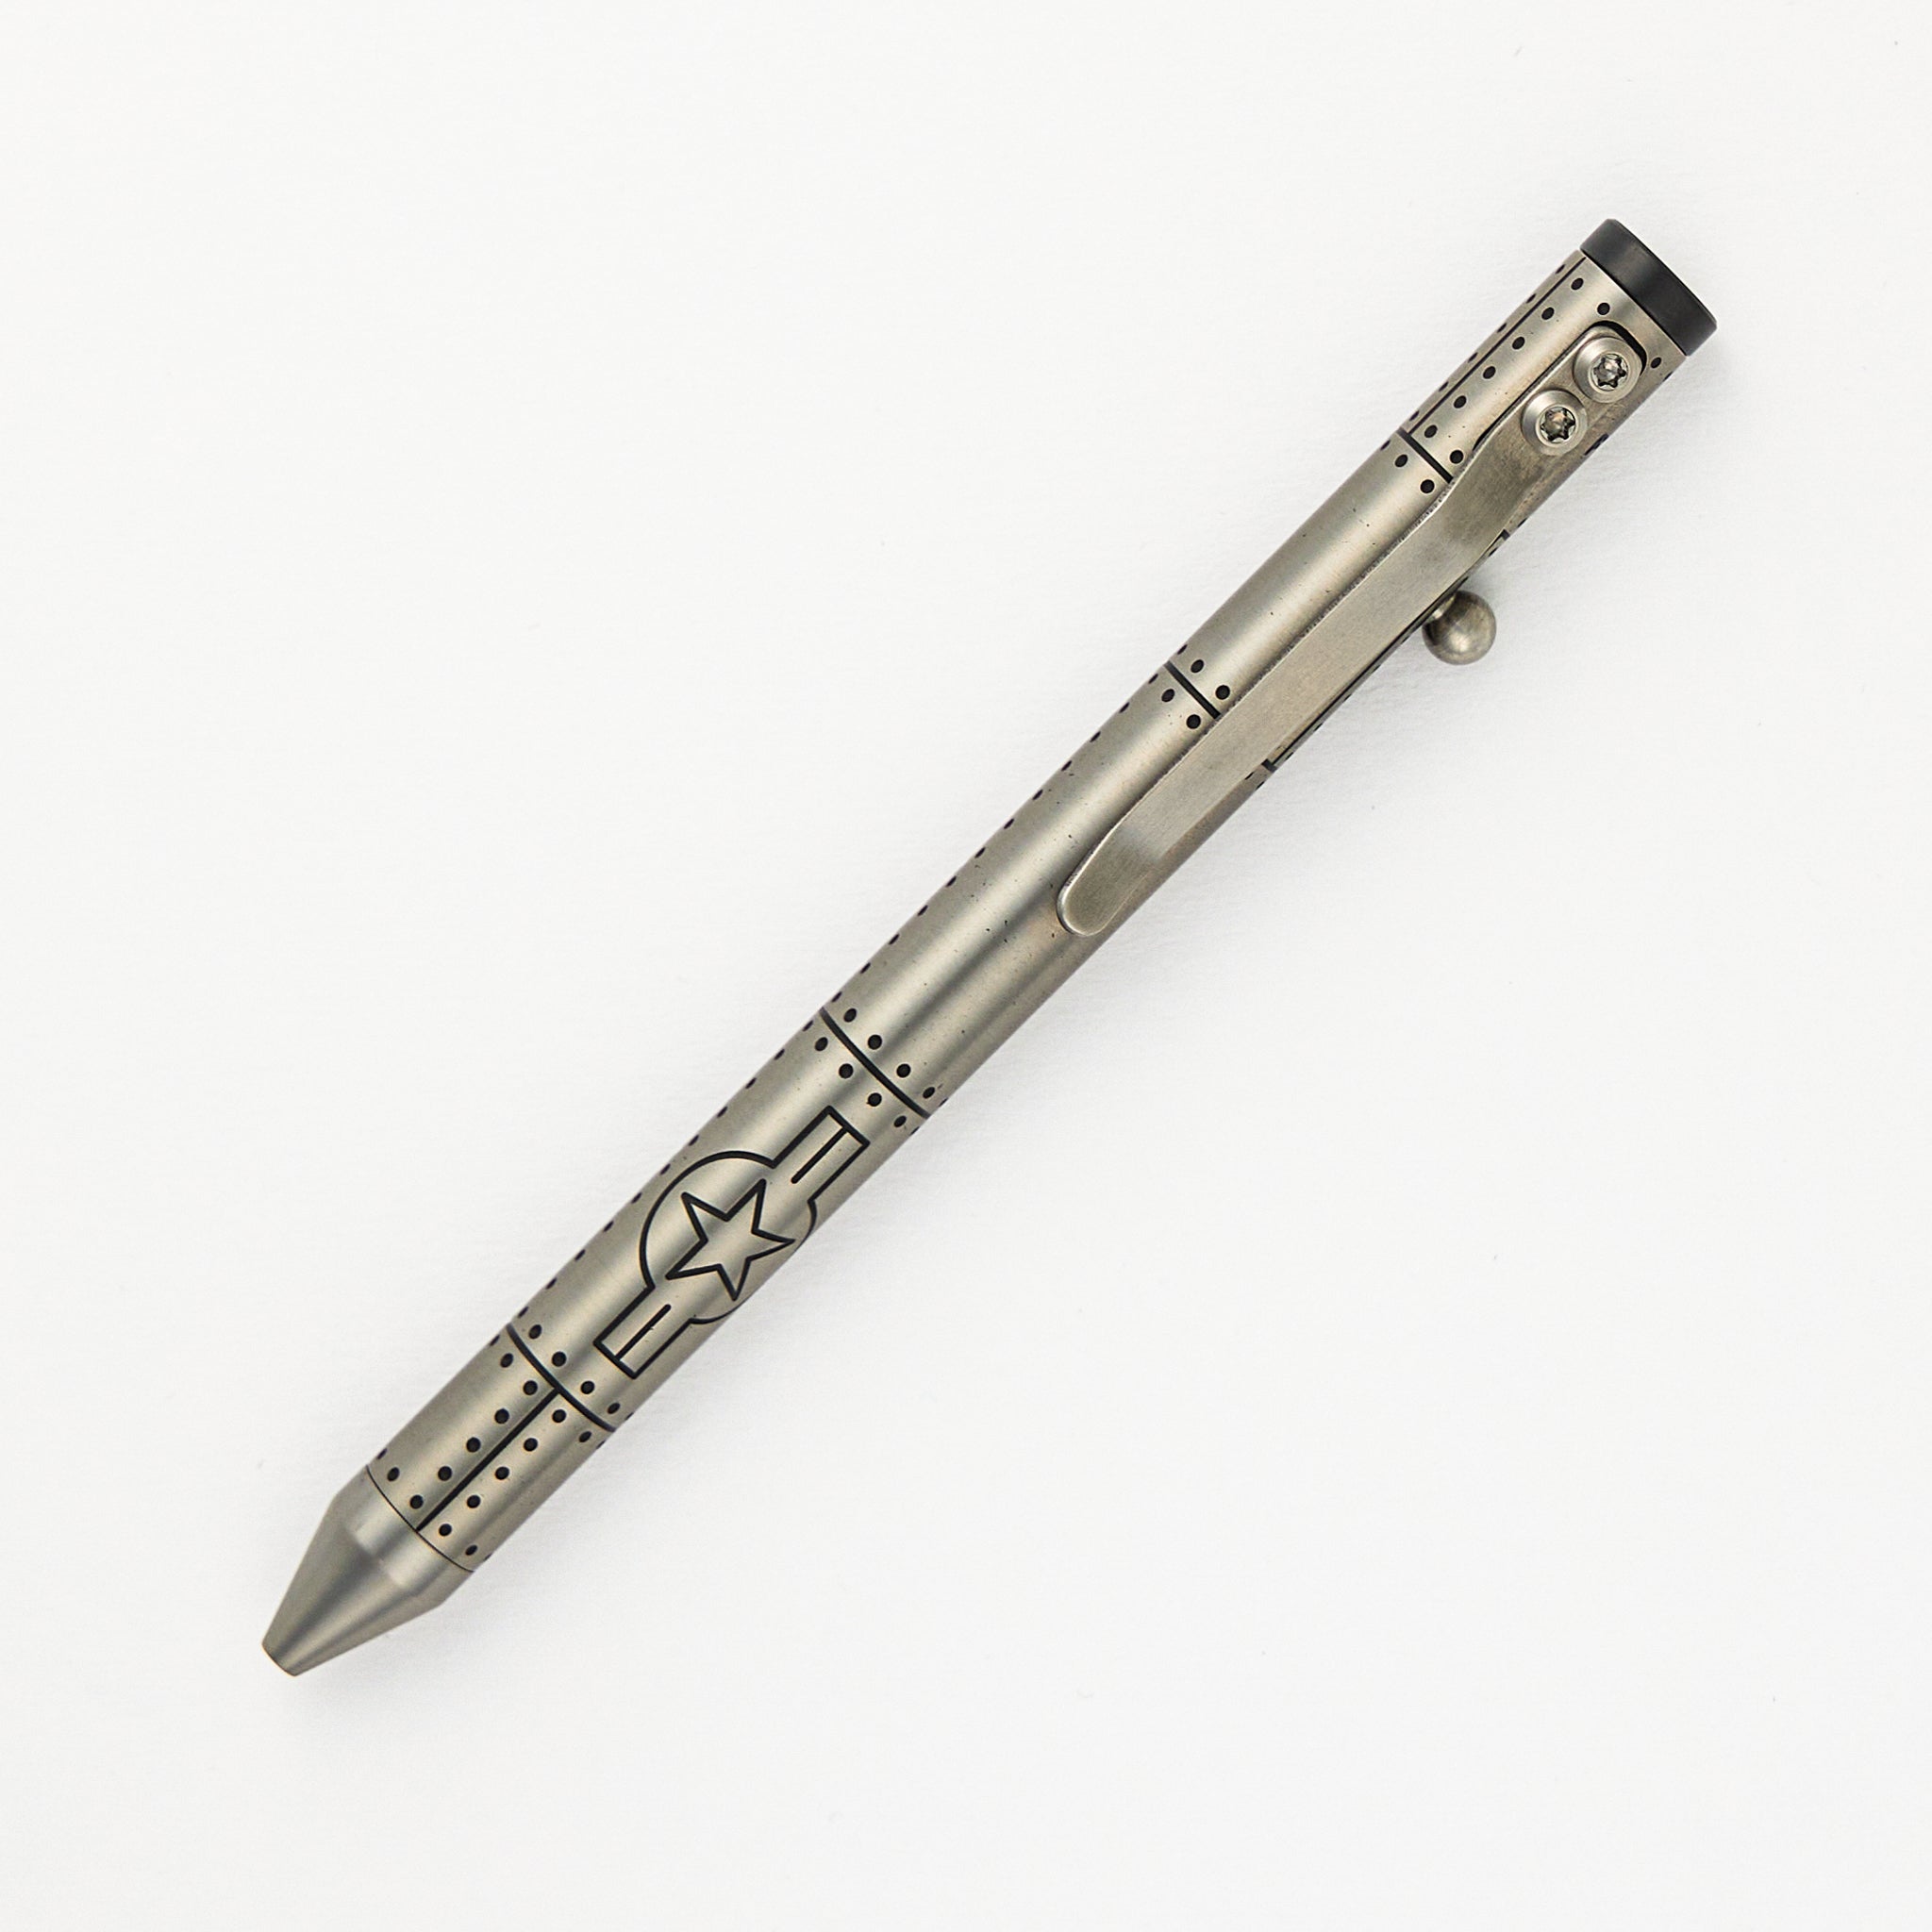 Fellhoelter/Cptn Axel Full Size TiBolt Pen - WW3 Tuxedo Titanium